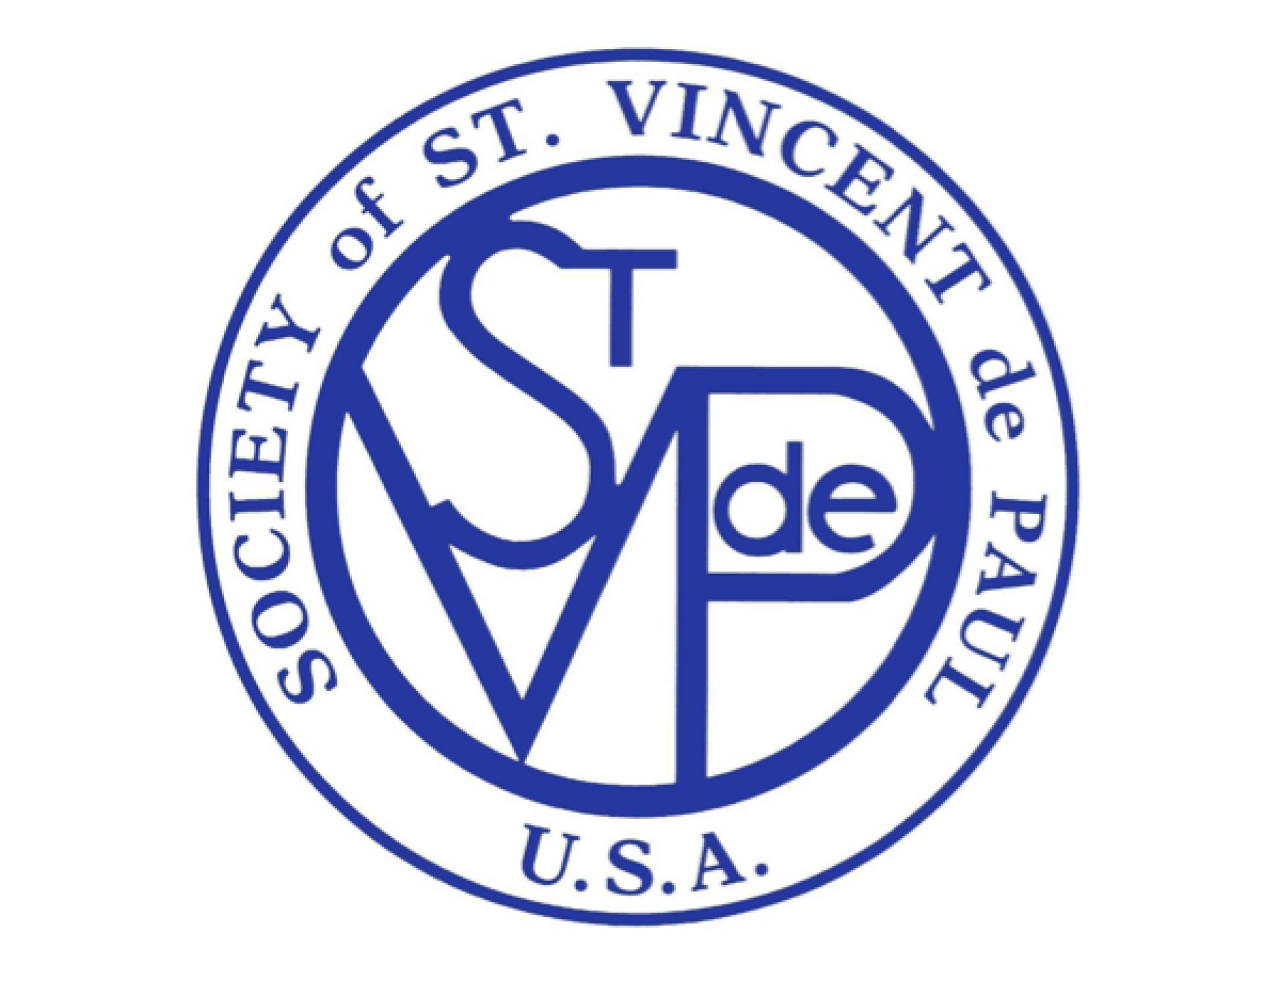 Society of St. Vincent de Paul USA logo.